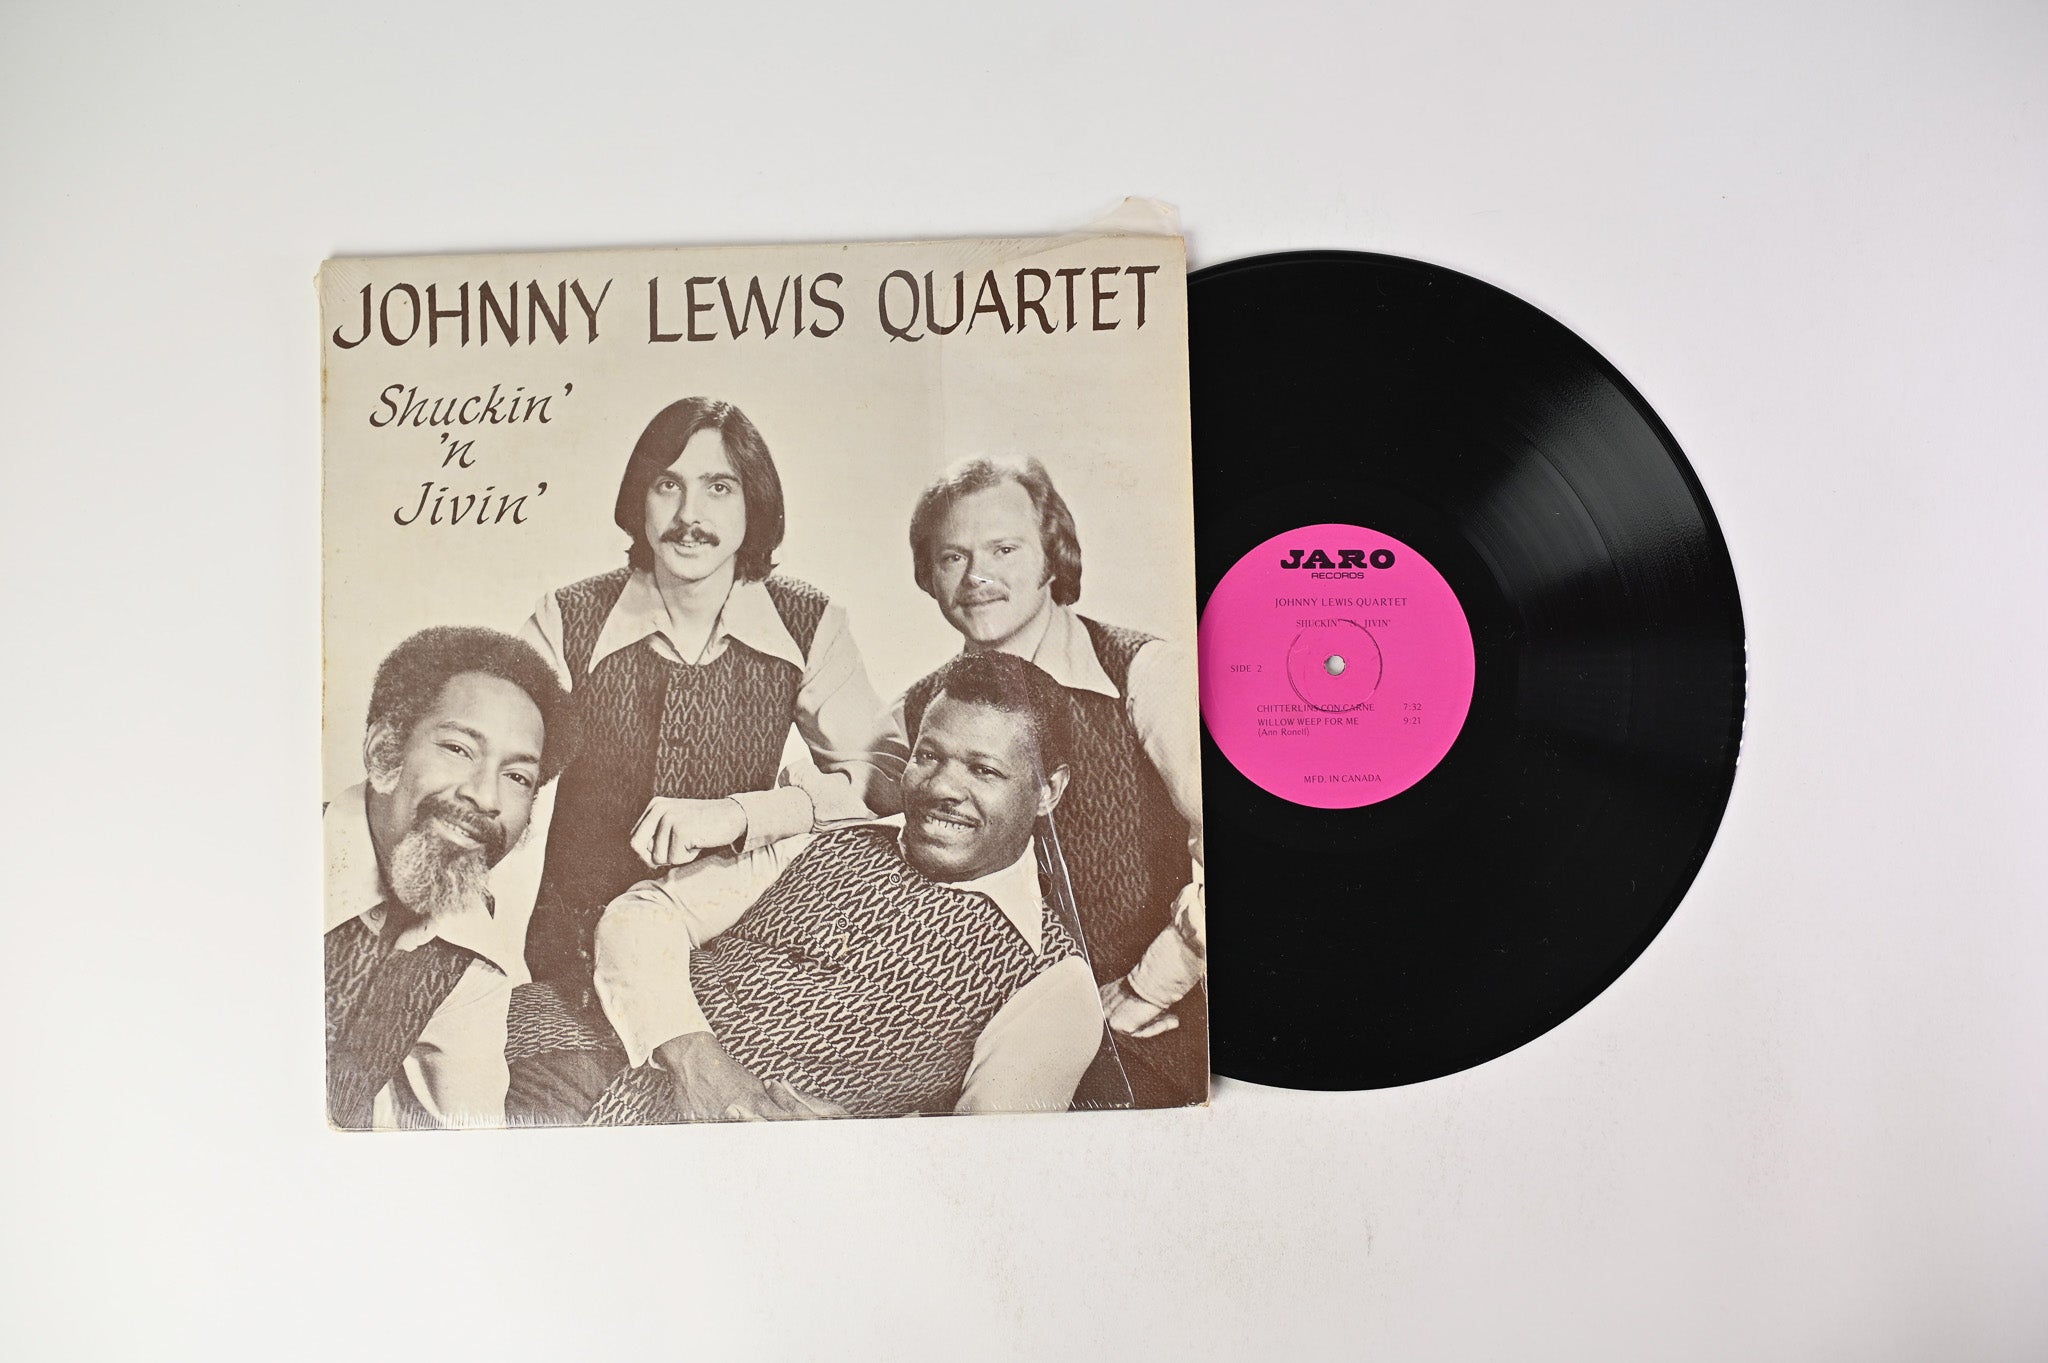 Johnny Lewis Quartet - Shuckin' 'N Jivin' on Jaro Records